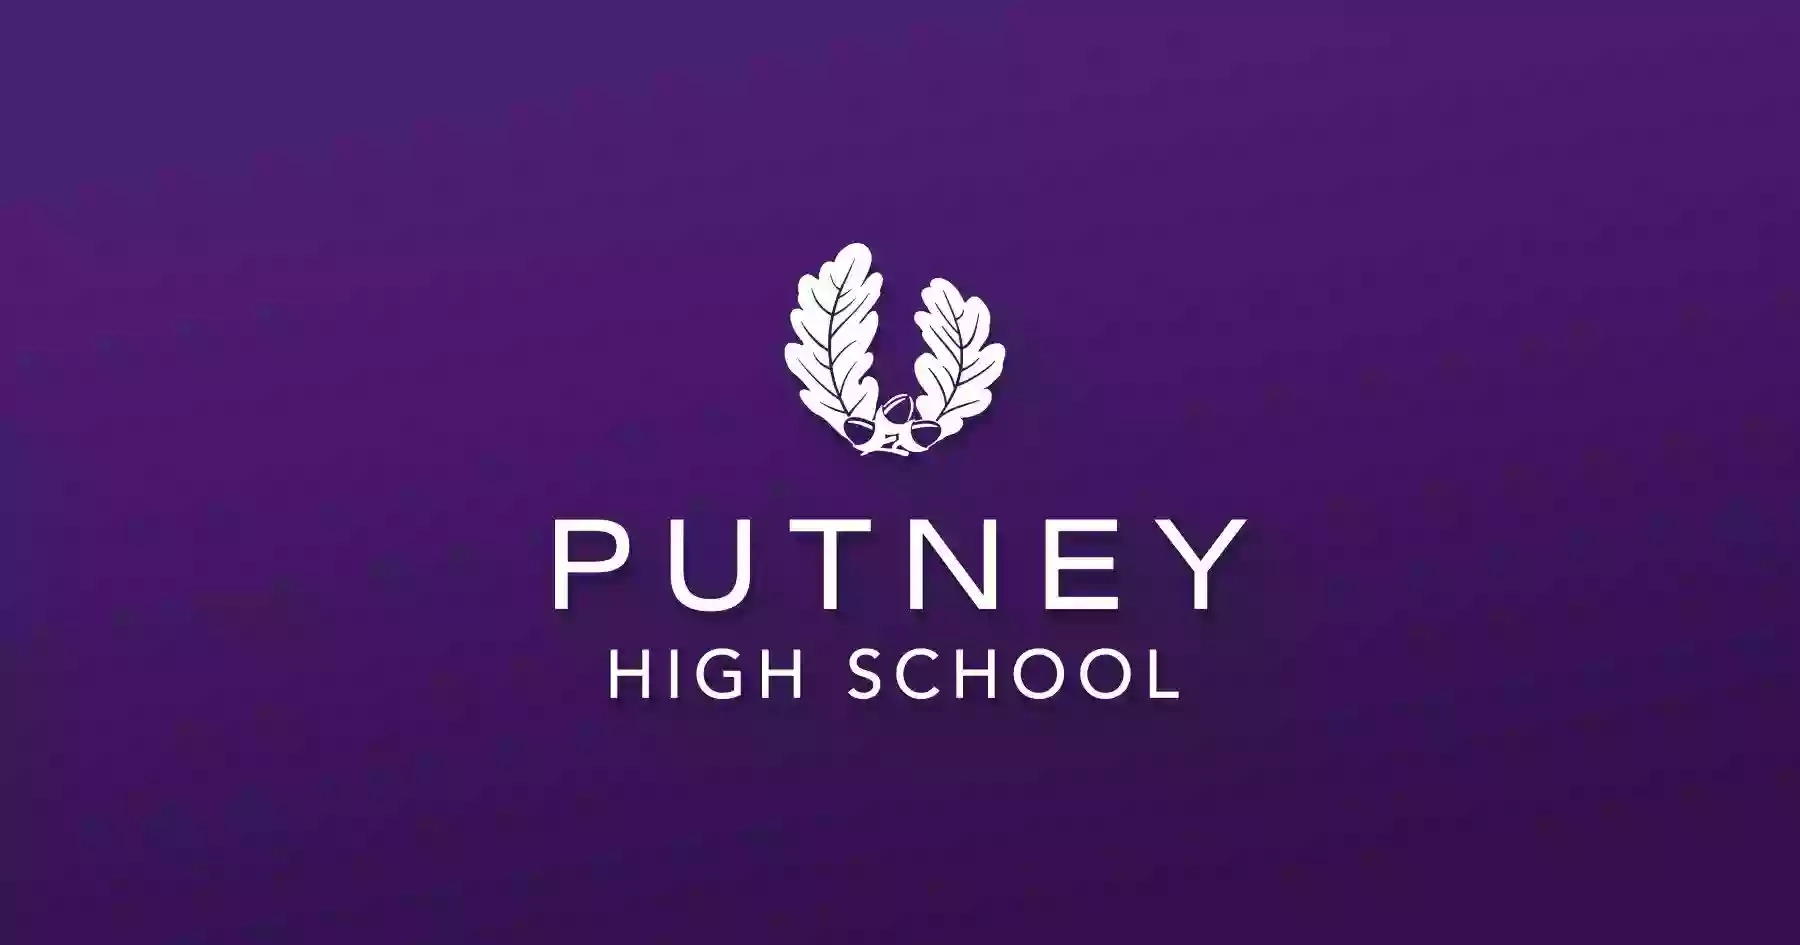 Putney High School